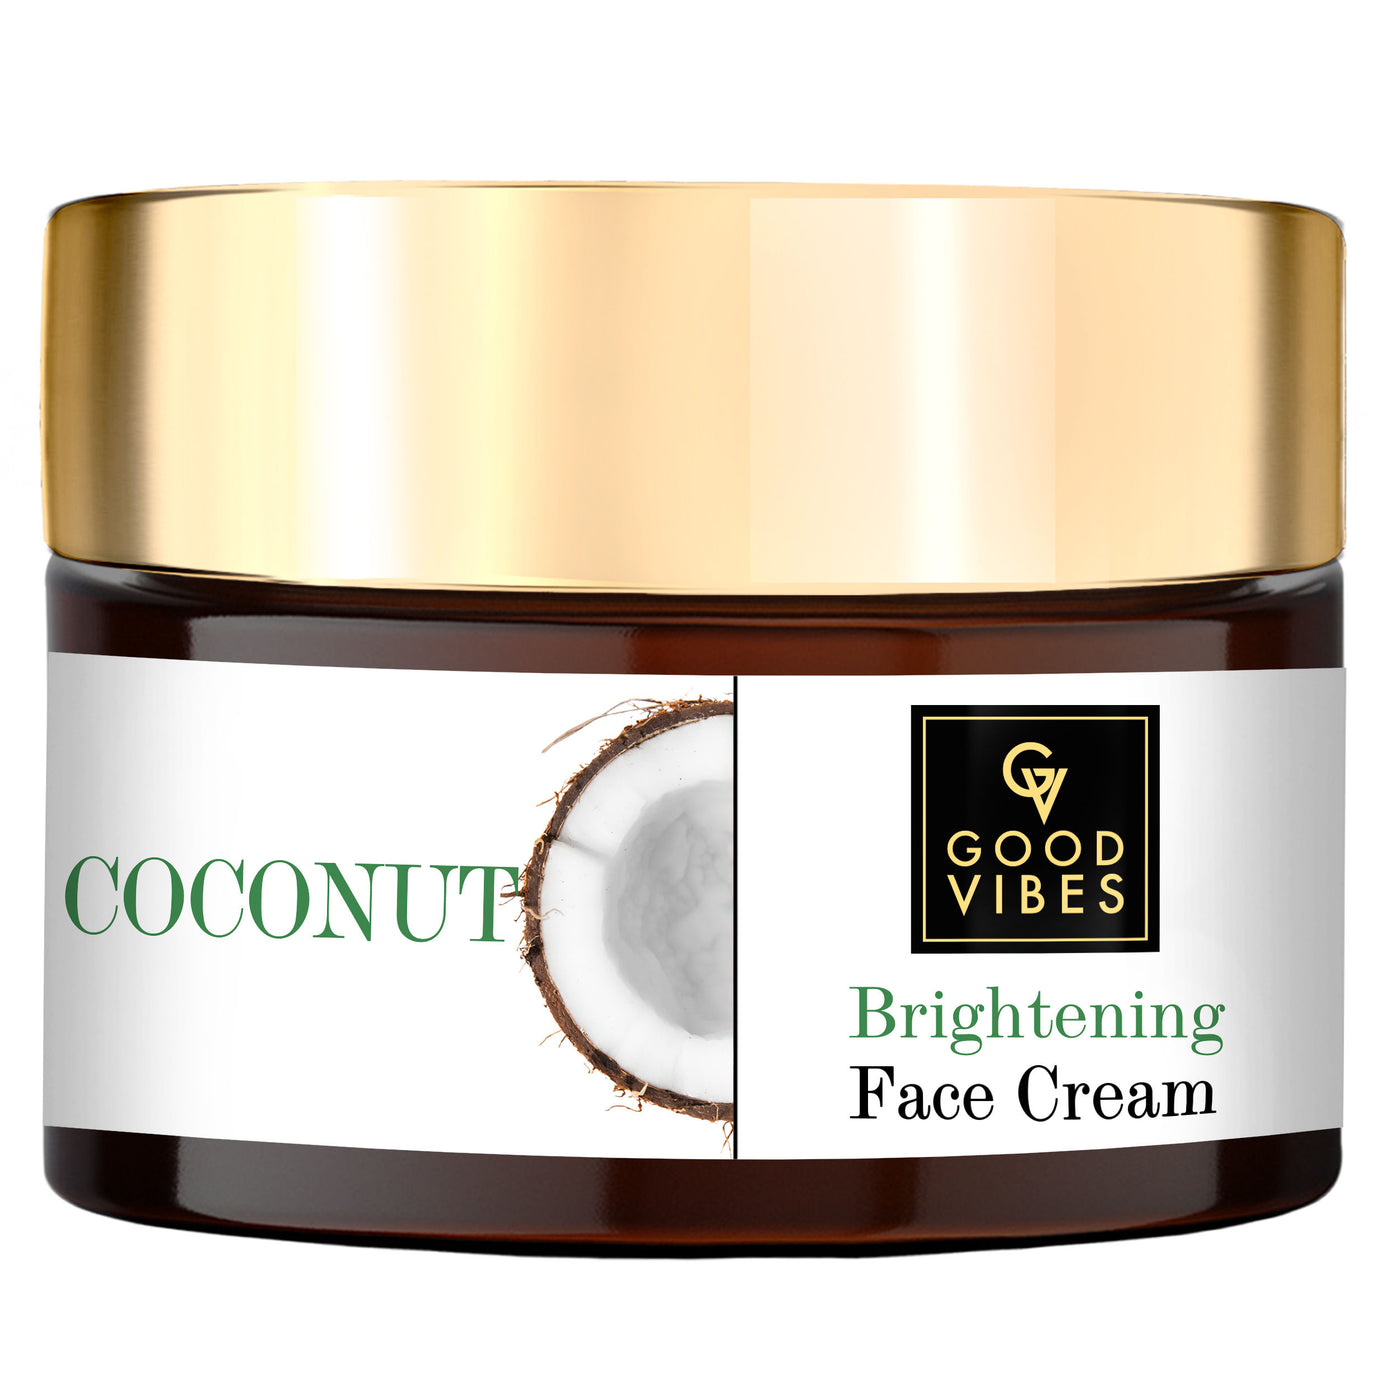 Good Vibes Brightening Face Cream - Coconut (50 g) - 1